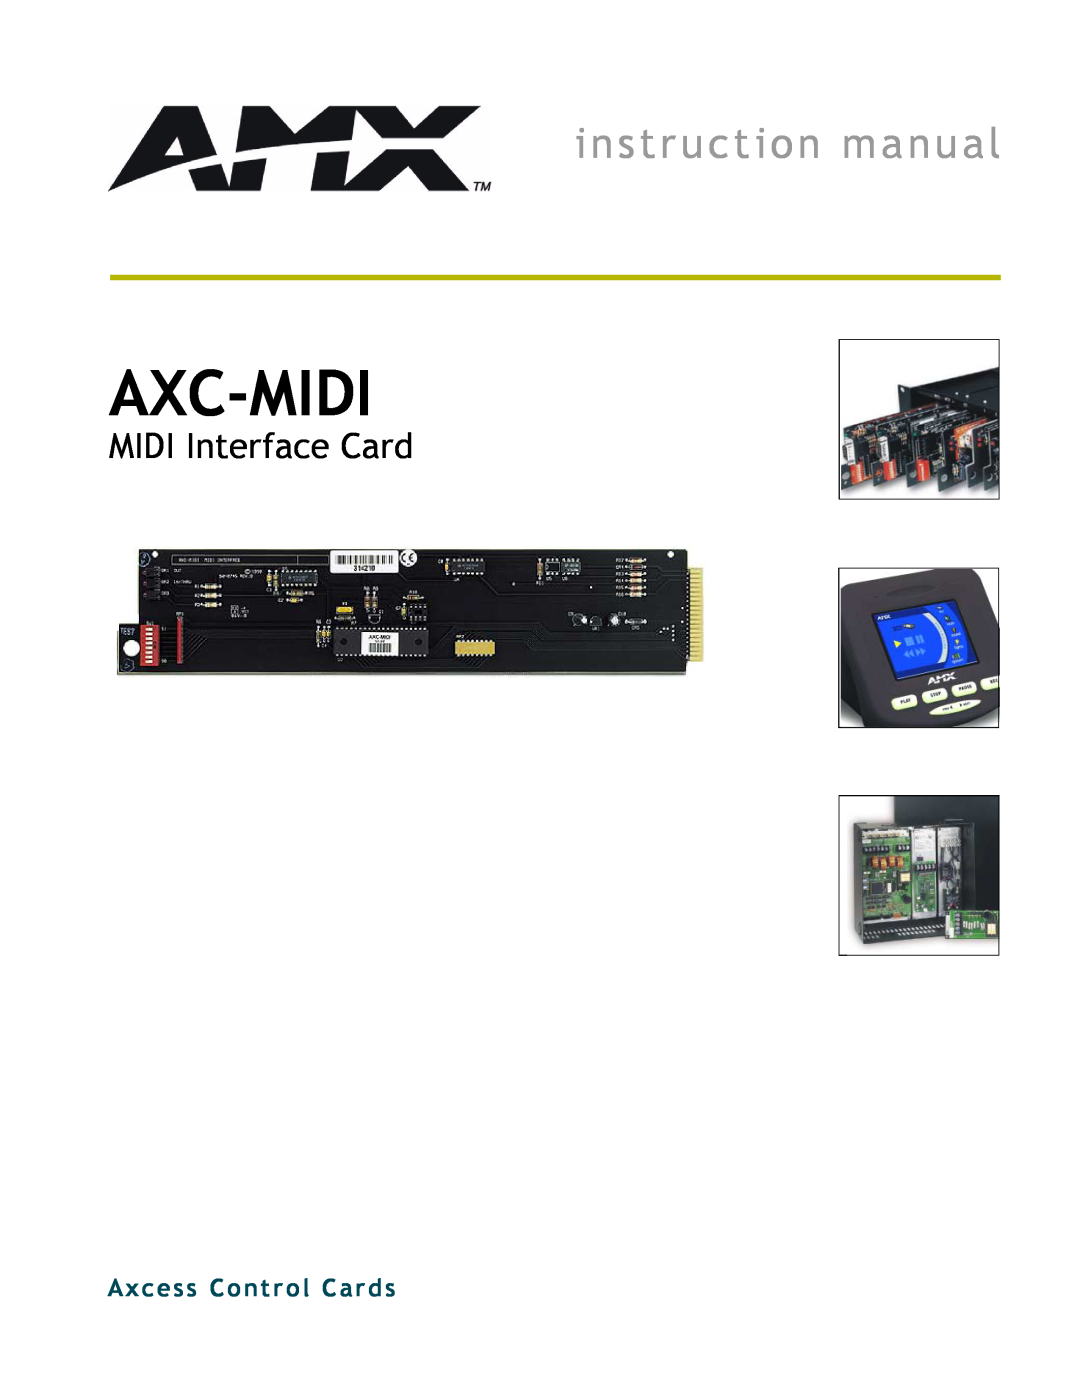 AMX AXC-MIDI instruction manual Axc-Midi, MIDI Interface Card, Axcess Control Cards 